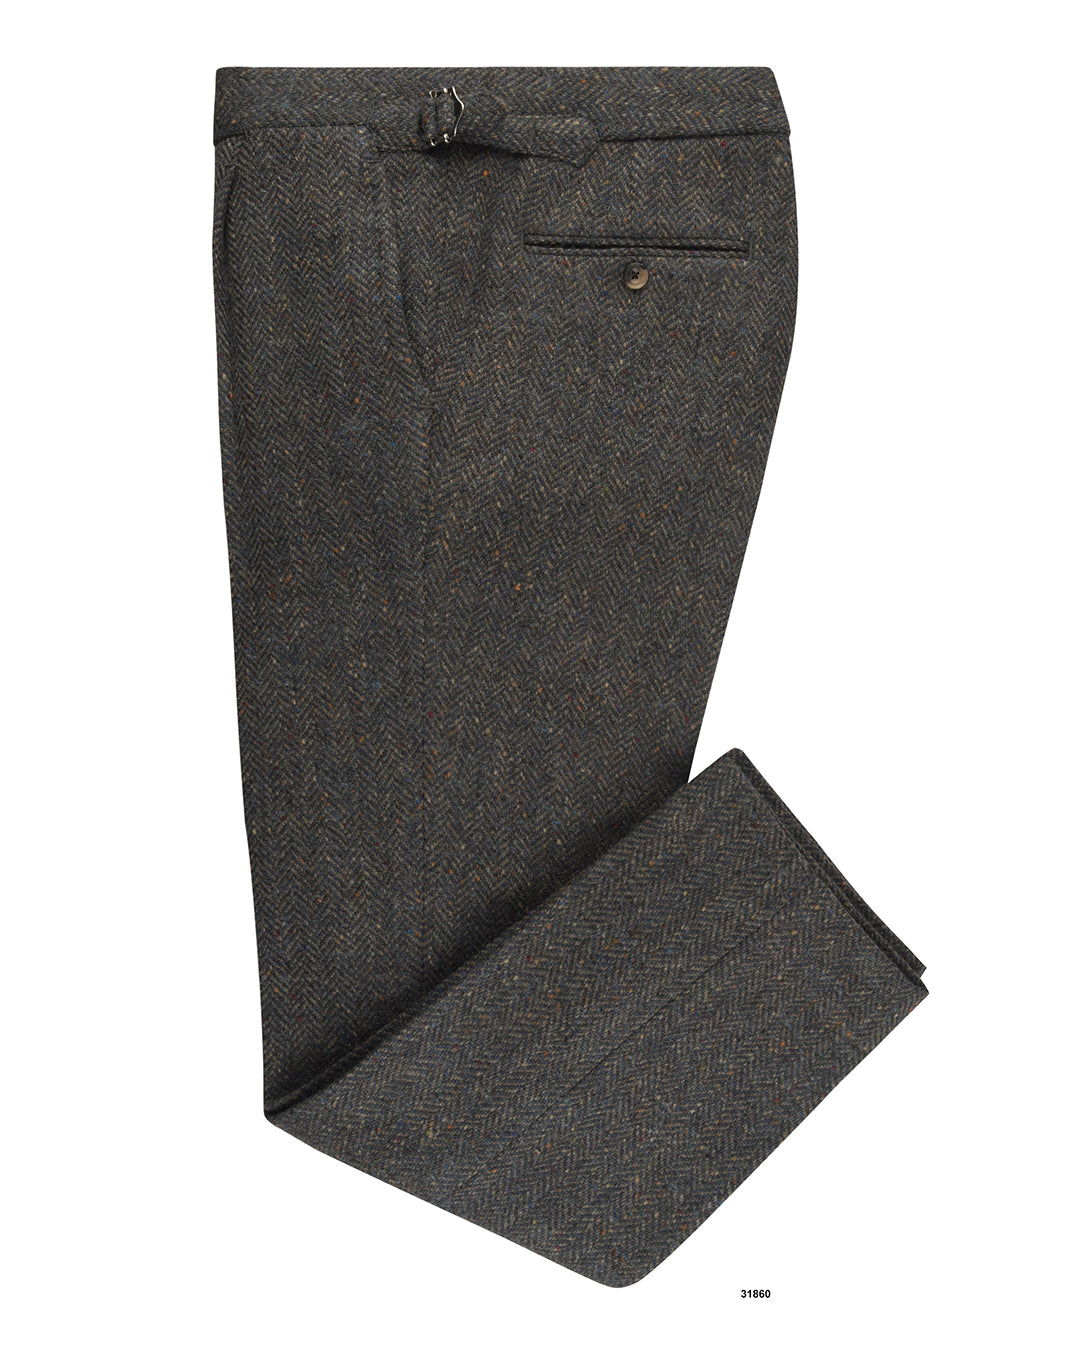 Molloy Herringbone Donegal Tweed Pants - Indigo